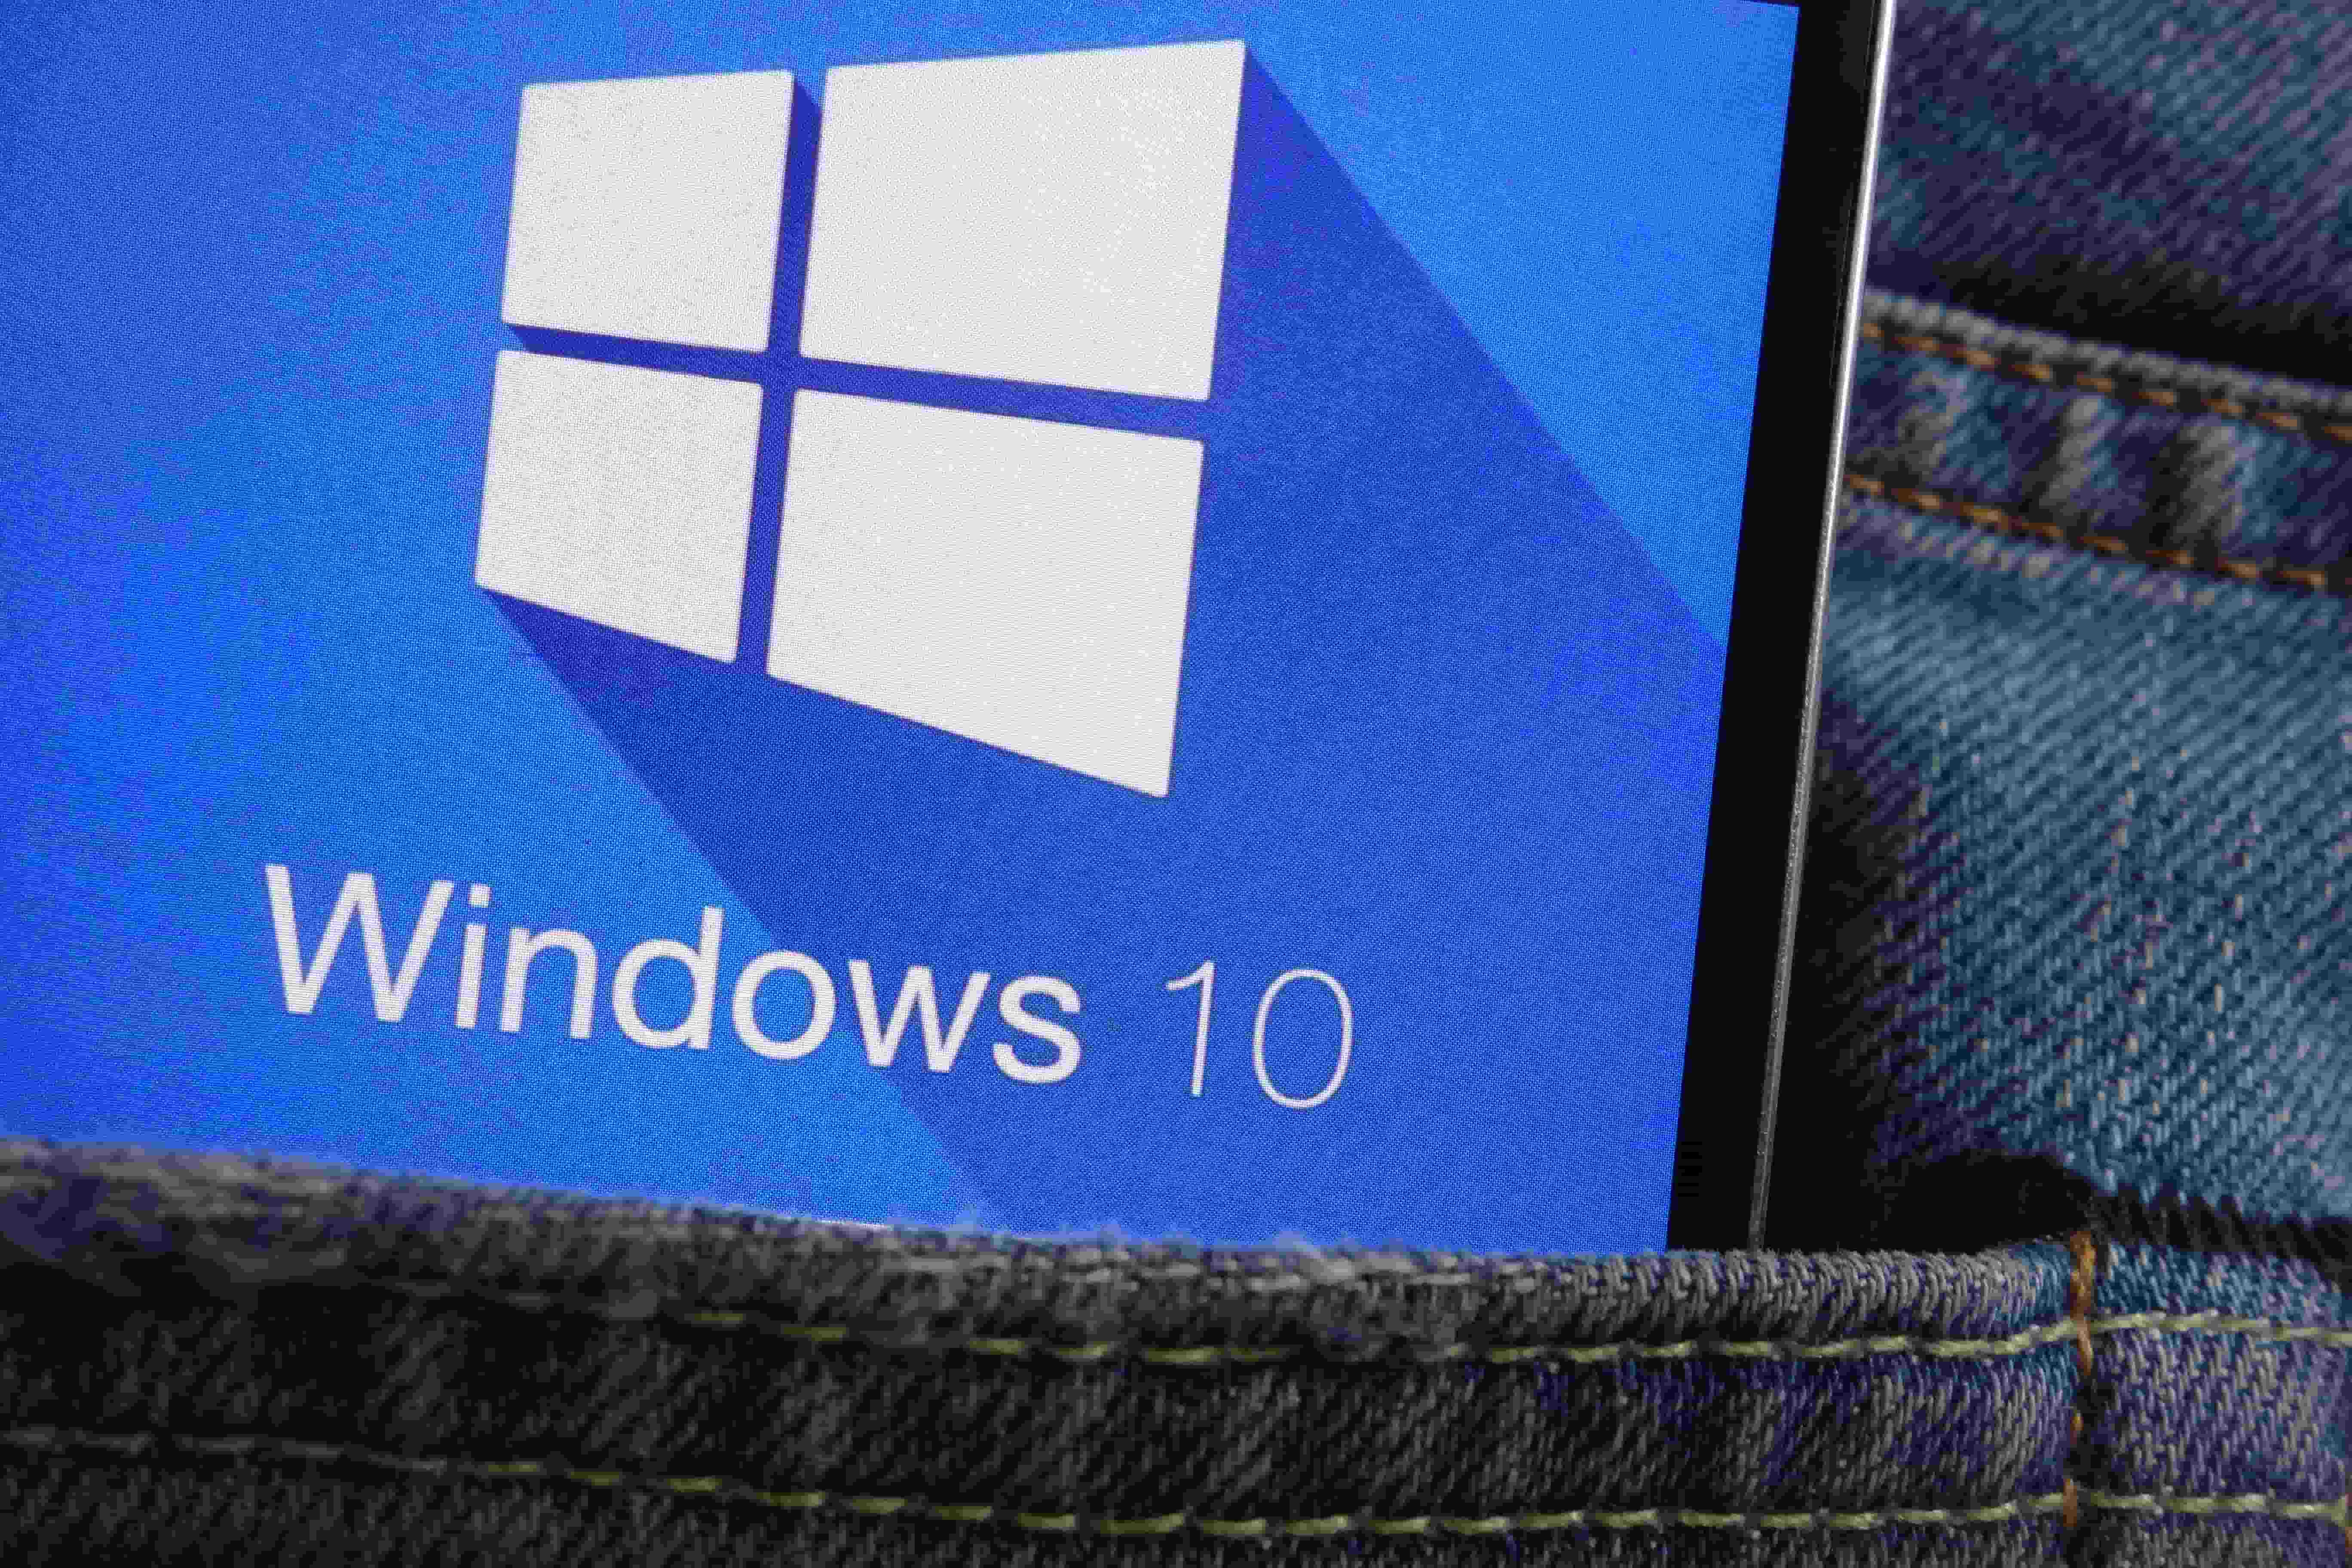 Windows 10 revamp